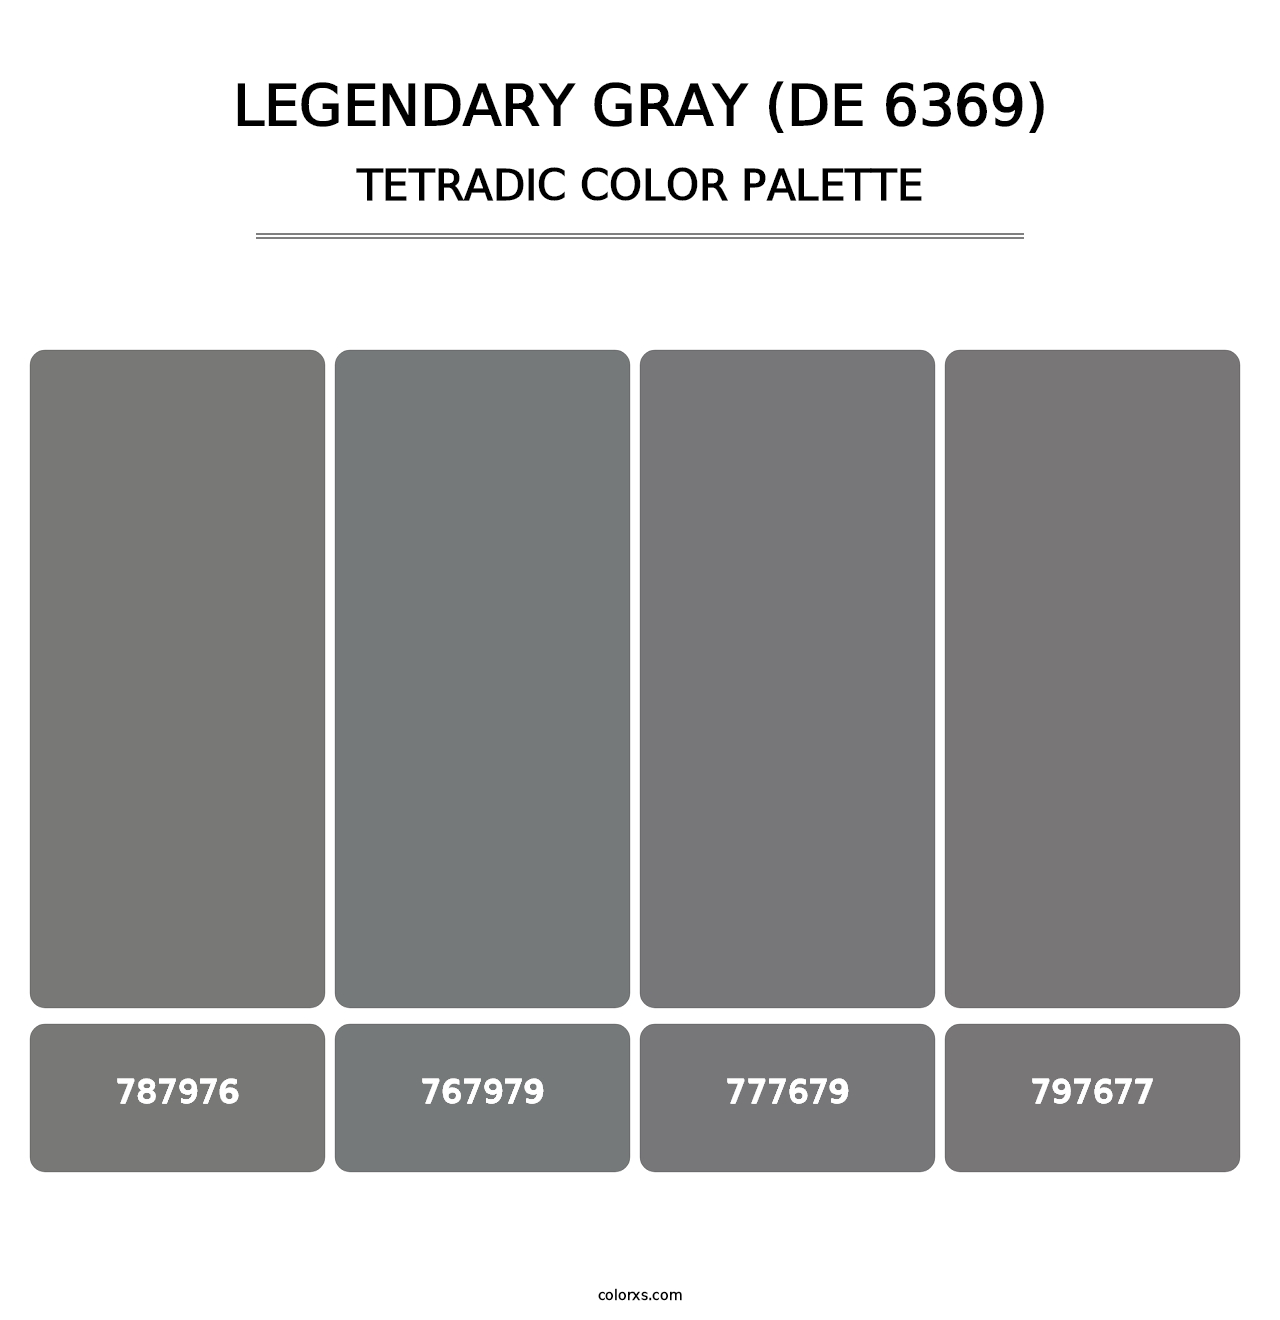 Legendary Gray (DE 6369) - Tetradic Color Palette